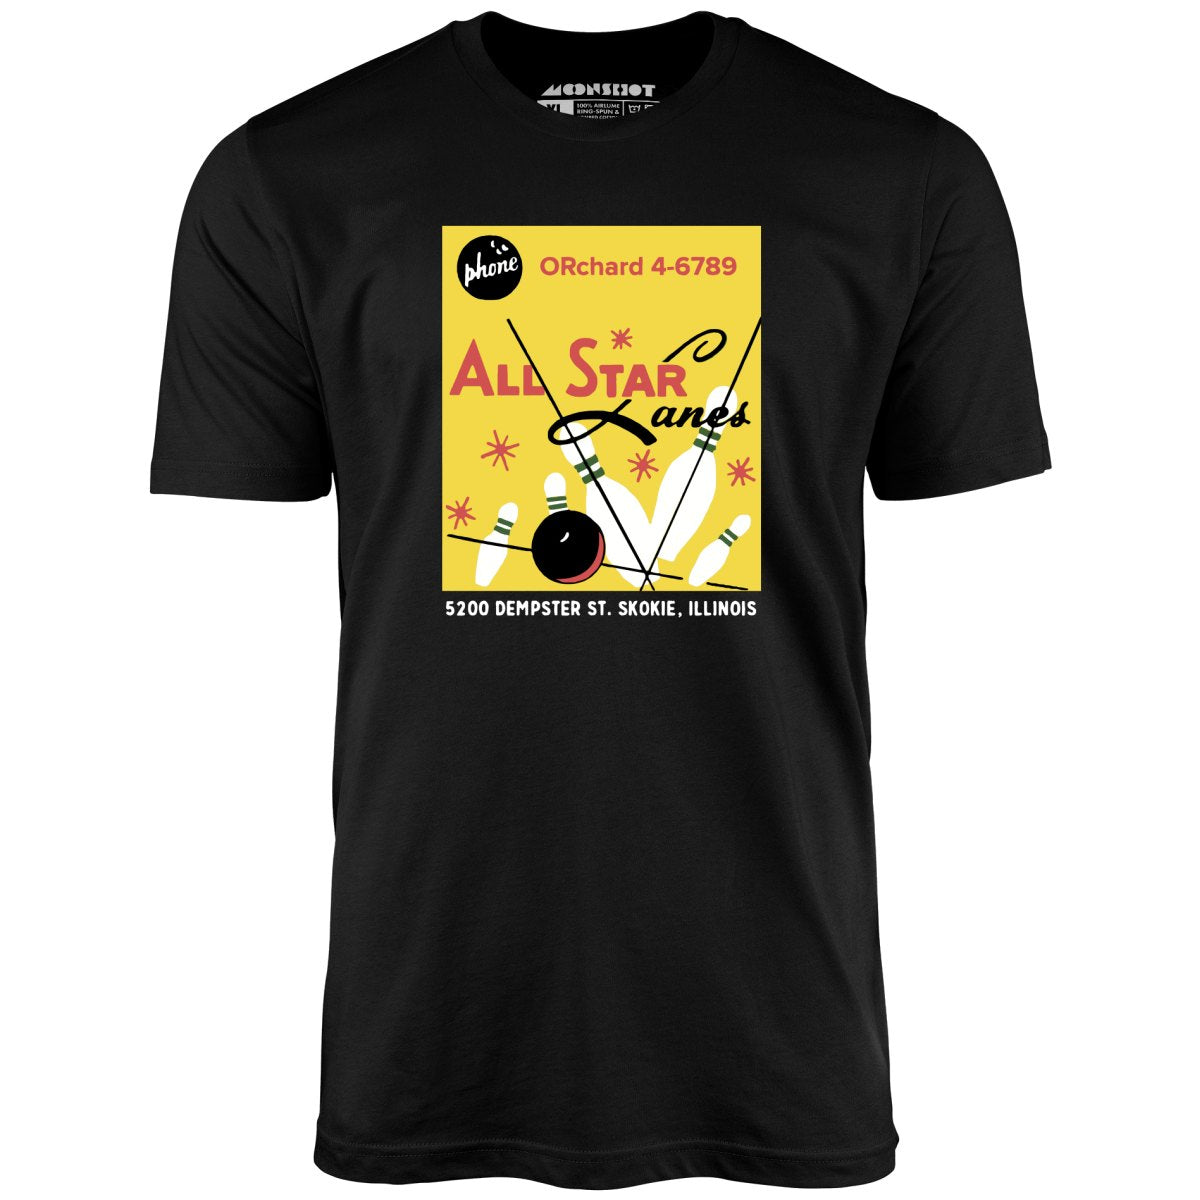 All Star Lanes v2 - St. Skokie, IL - Vintage Bowling Alley - Unisex T-Shirt